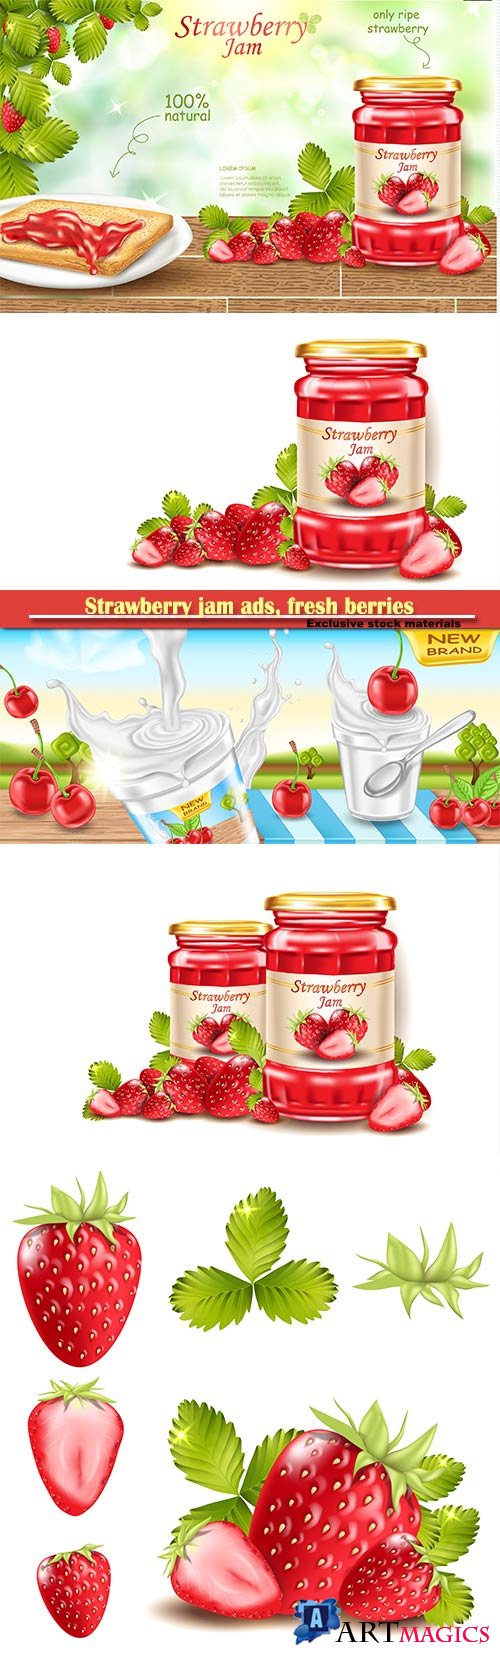 Strawberry jam ads, fresh berries realistic 3d illustration